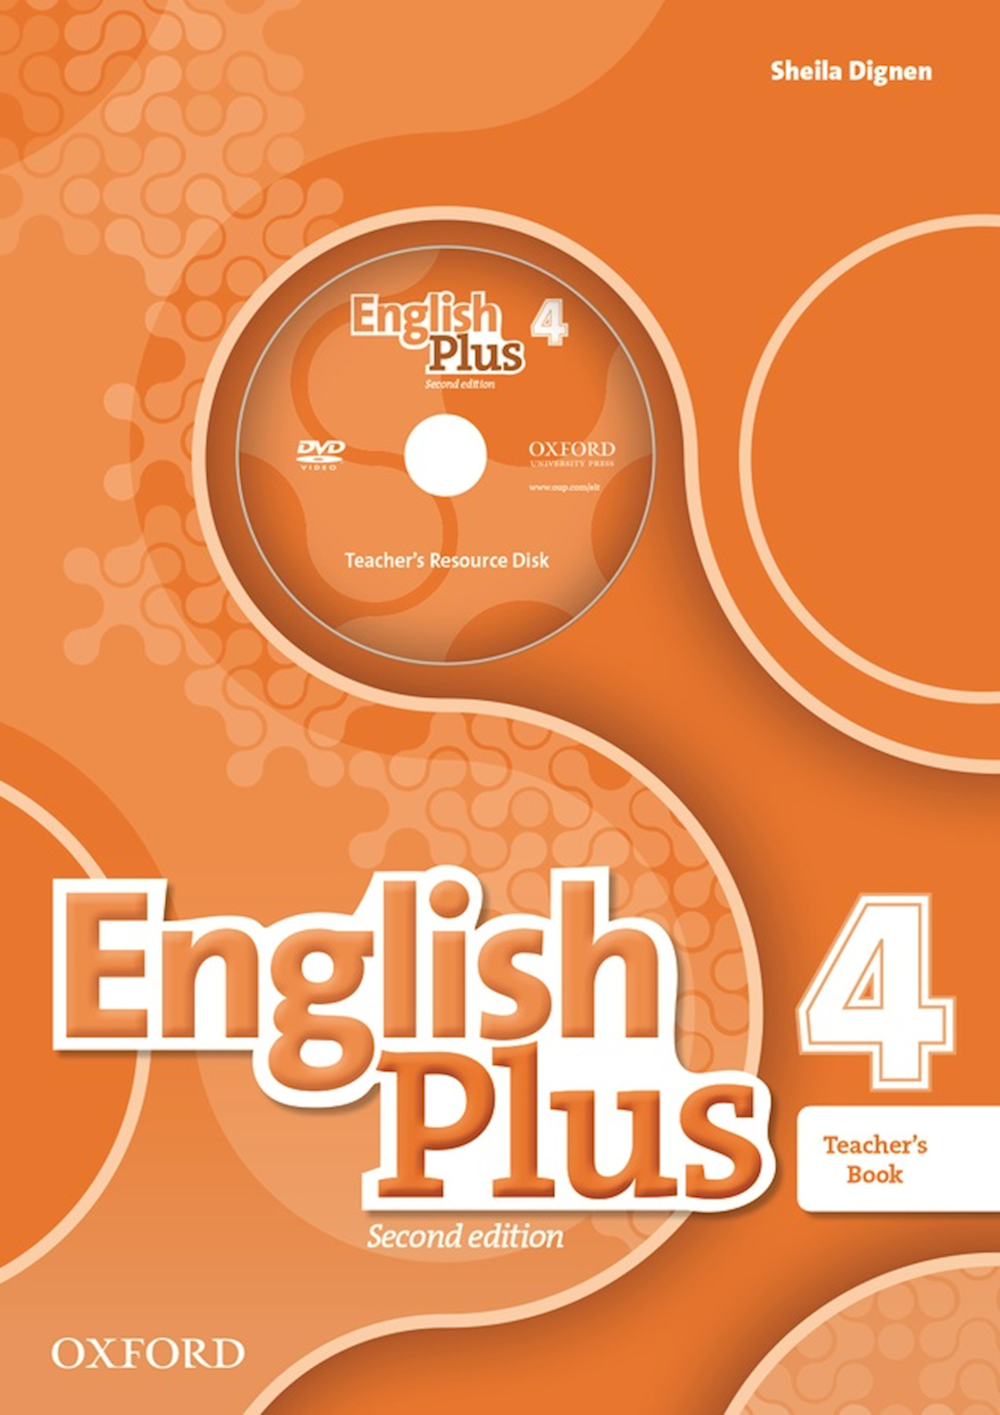 English Plus 4 Second Edition Teacher's Book mit K